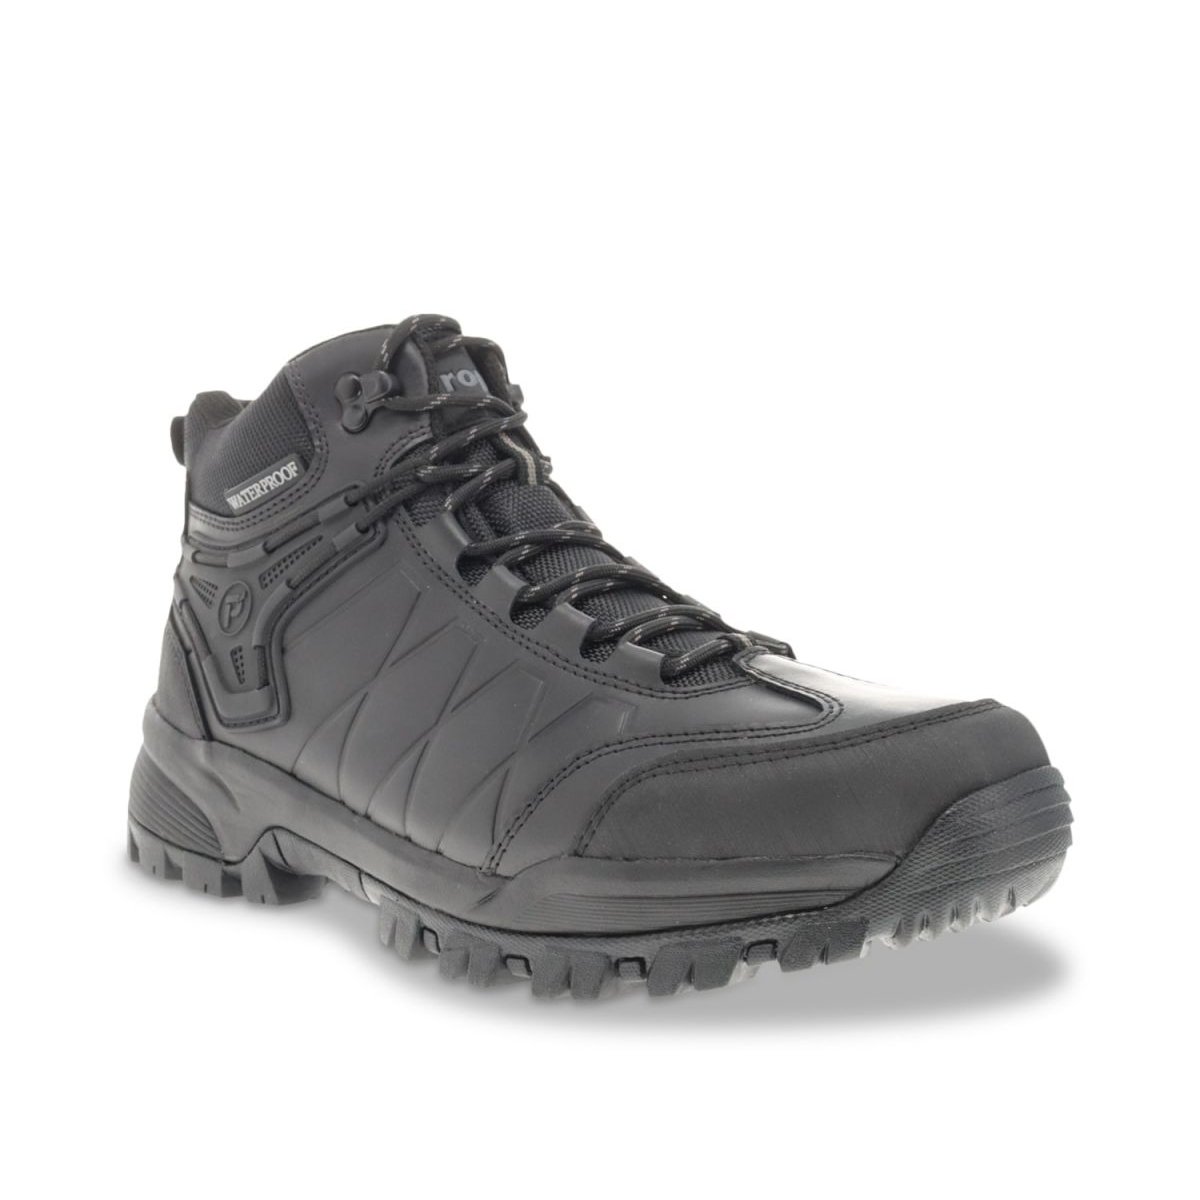 Propet Men's Ridge Walker Force Hiking Boots Black - MBA052LBLK BLACK - BLACK, 15 X-Wide